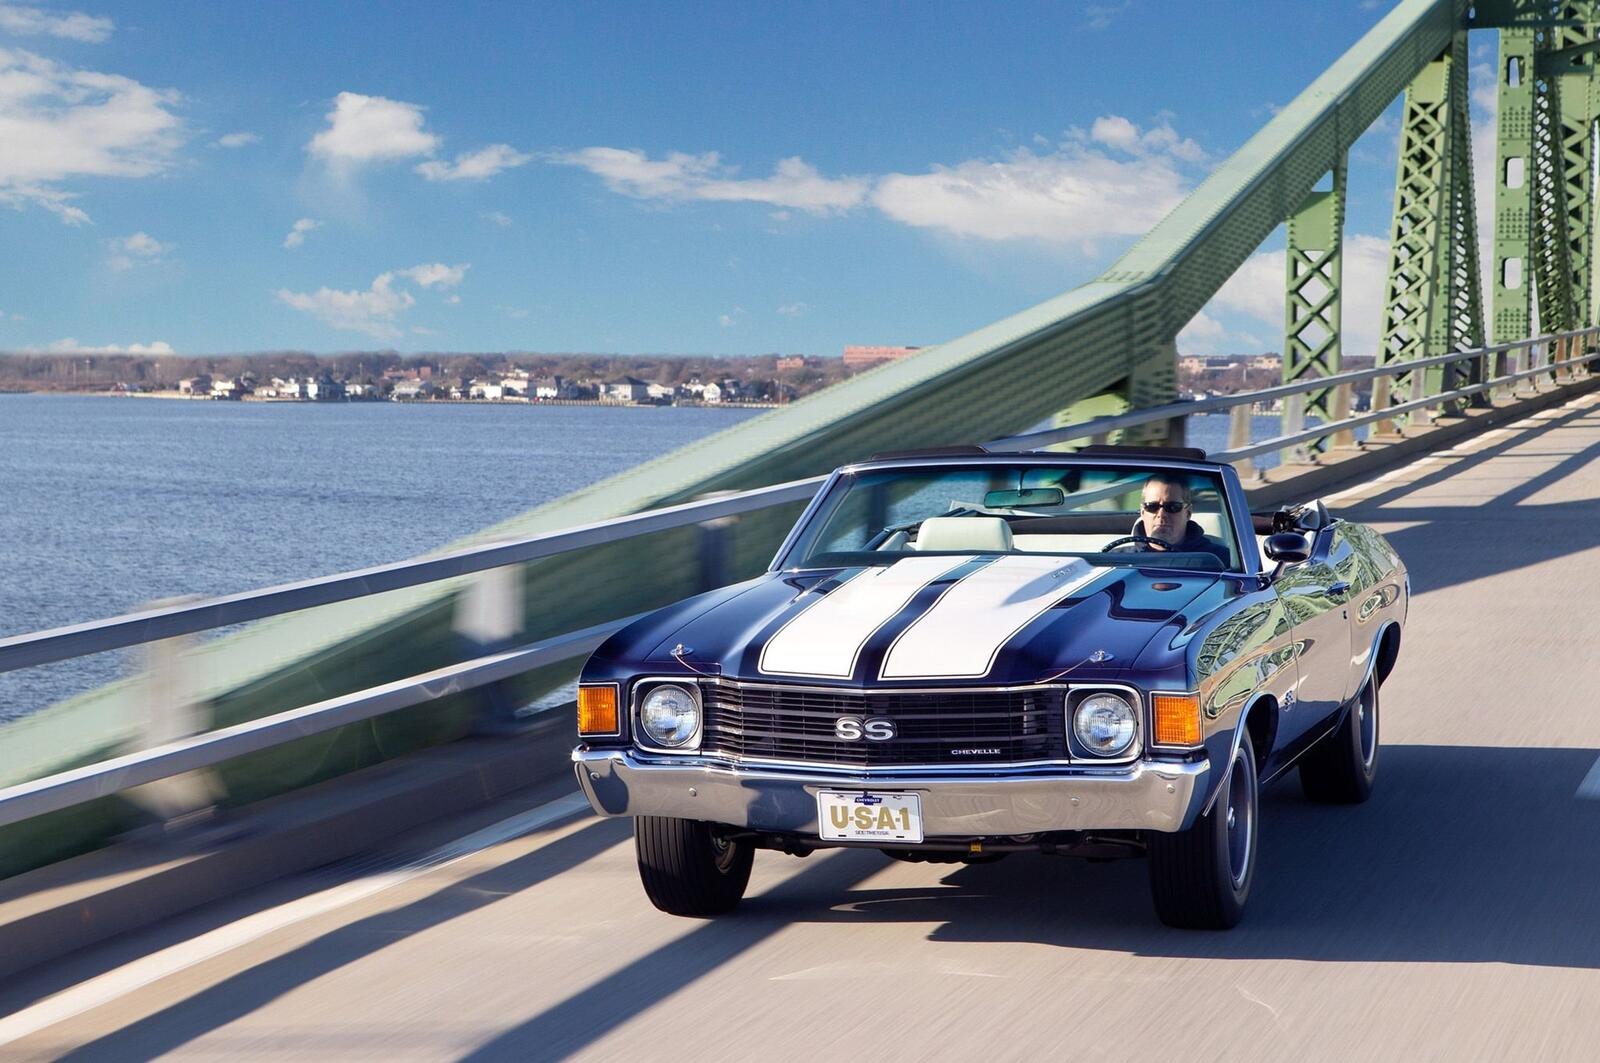 Бесплатное фото Chevrolet Chevelle Ss 1967 года едет по мосту